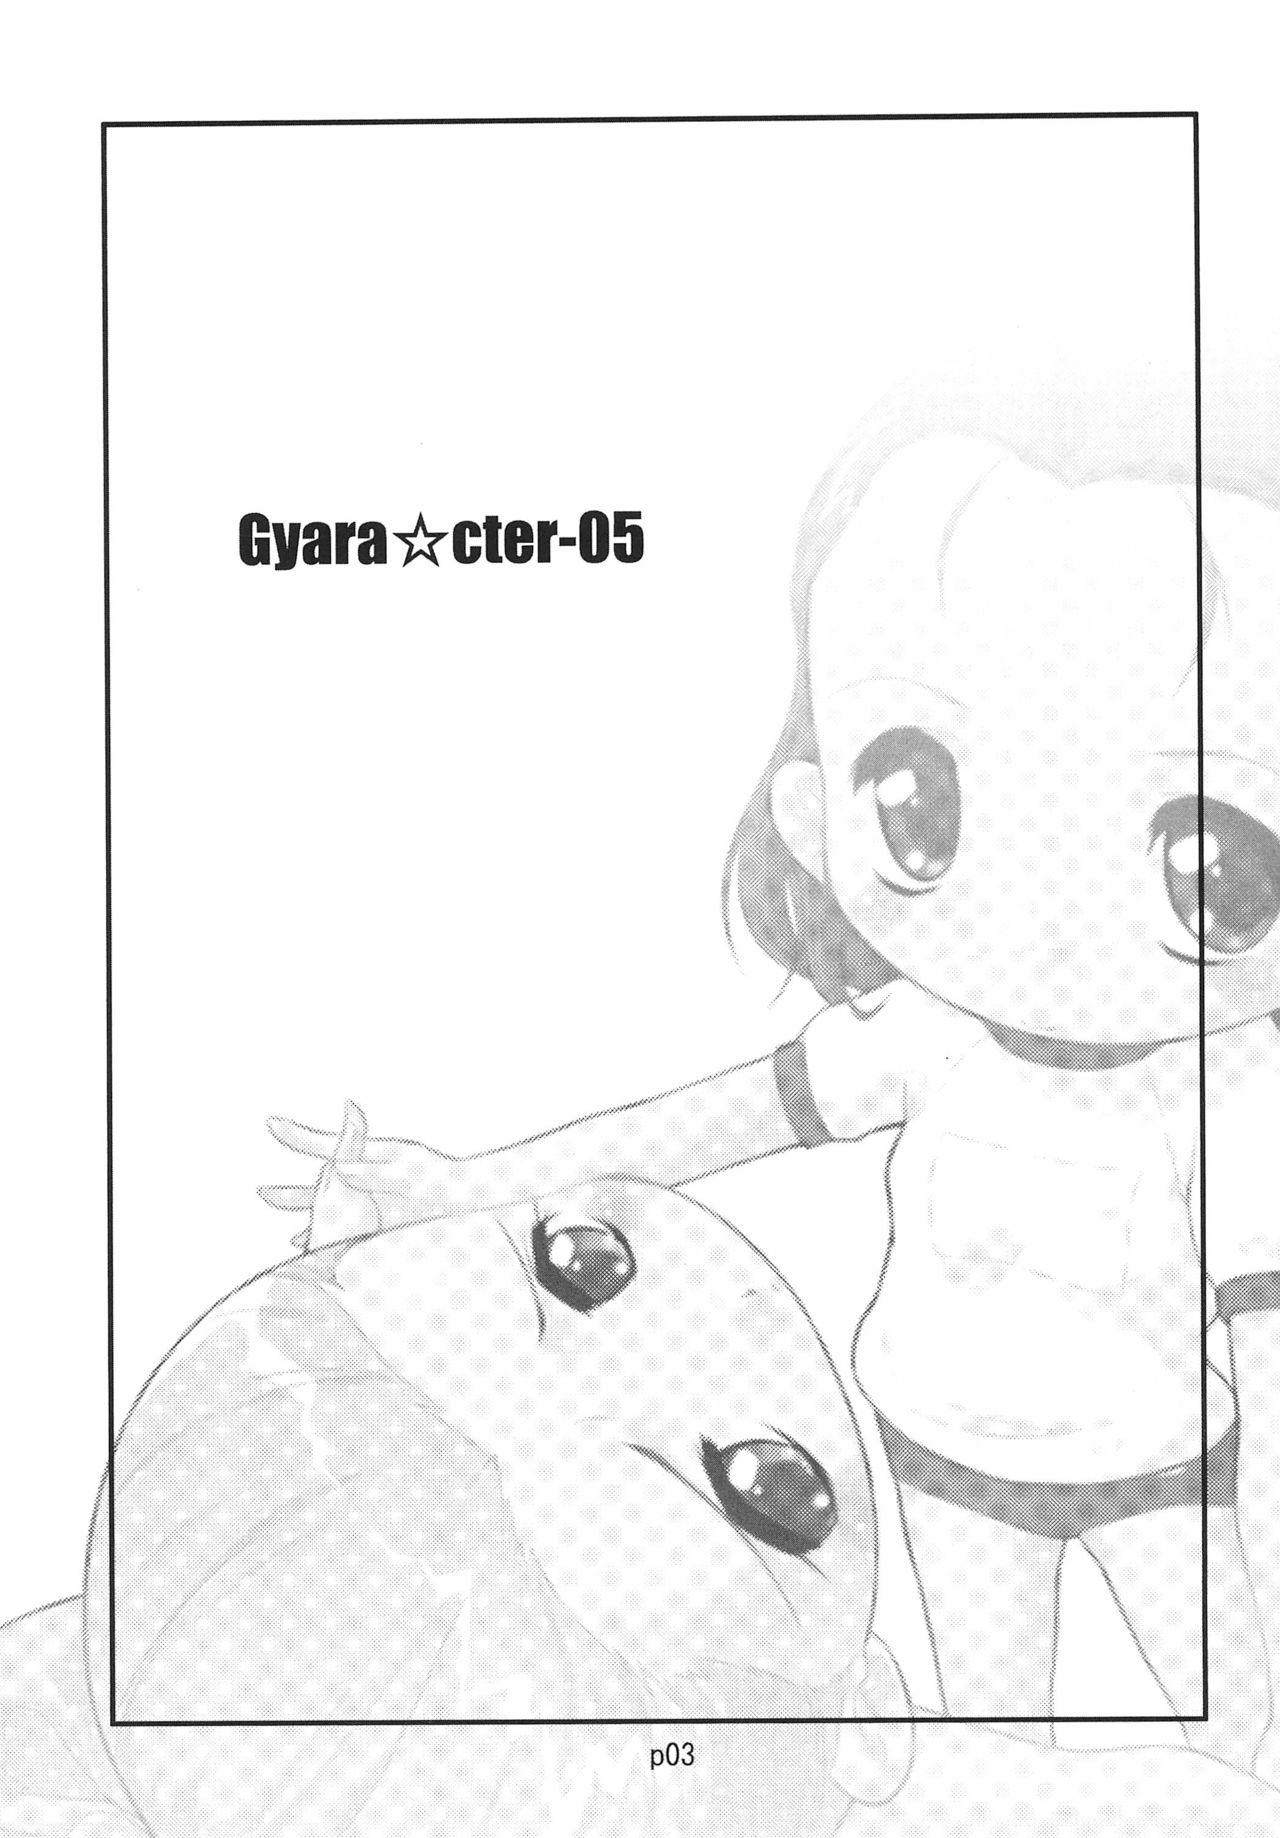 Chacal Gyara☆cter-05 - Original Denmark - Page 3